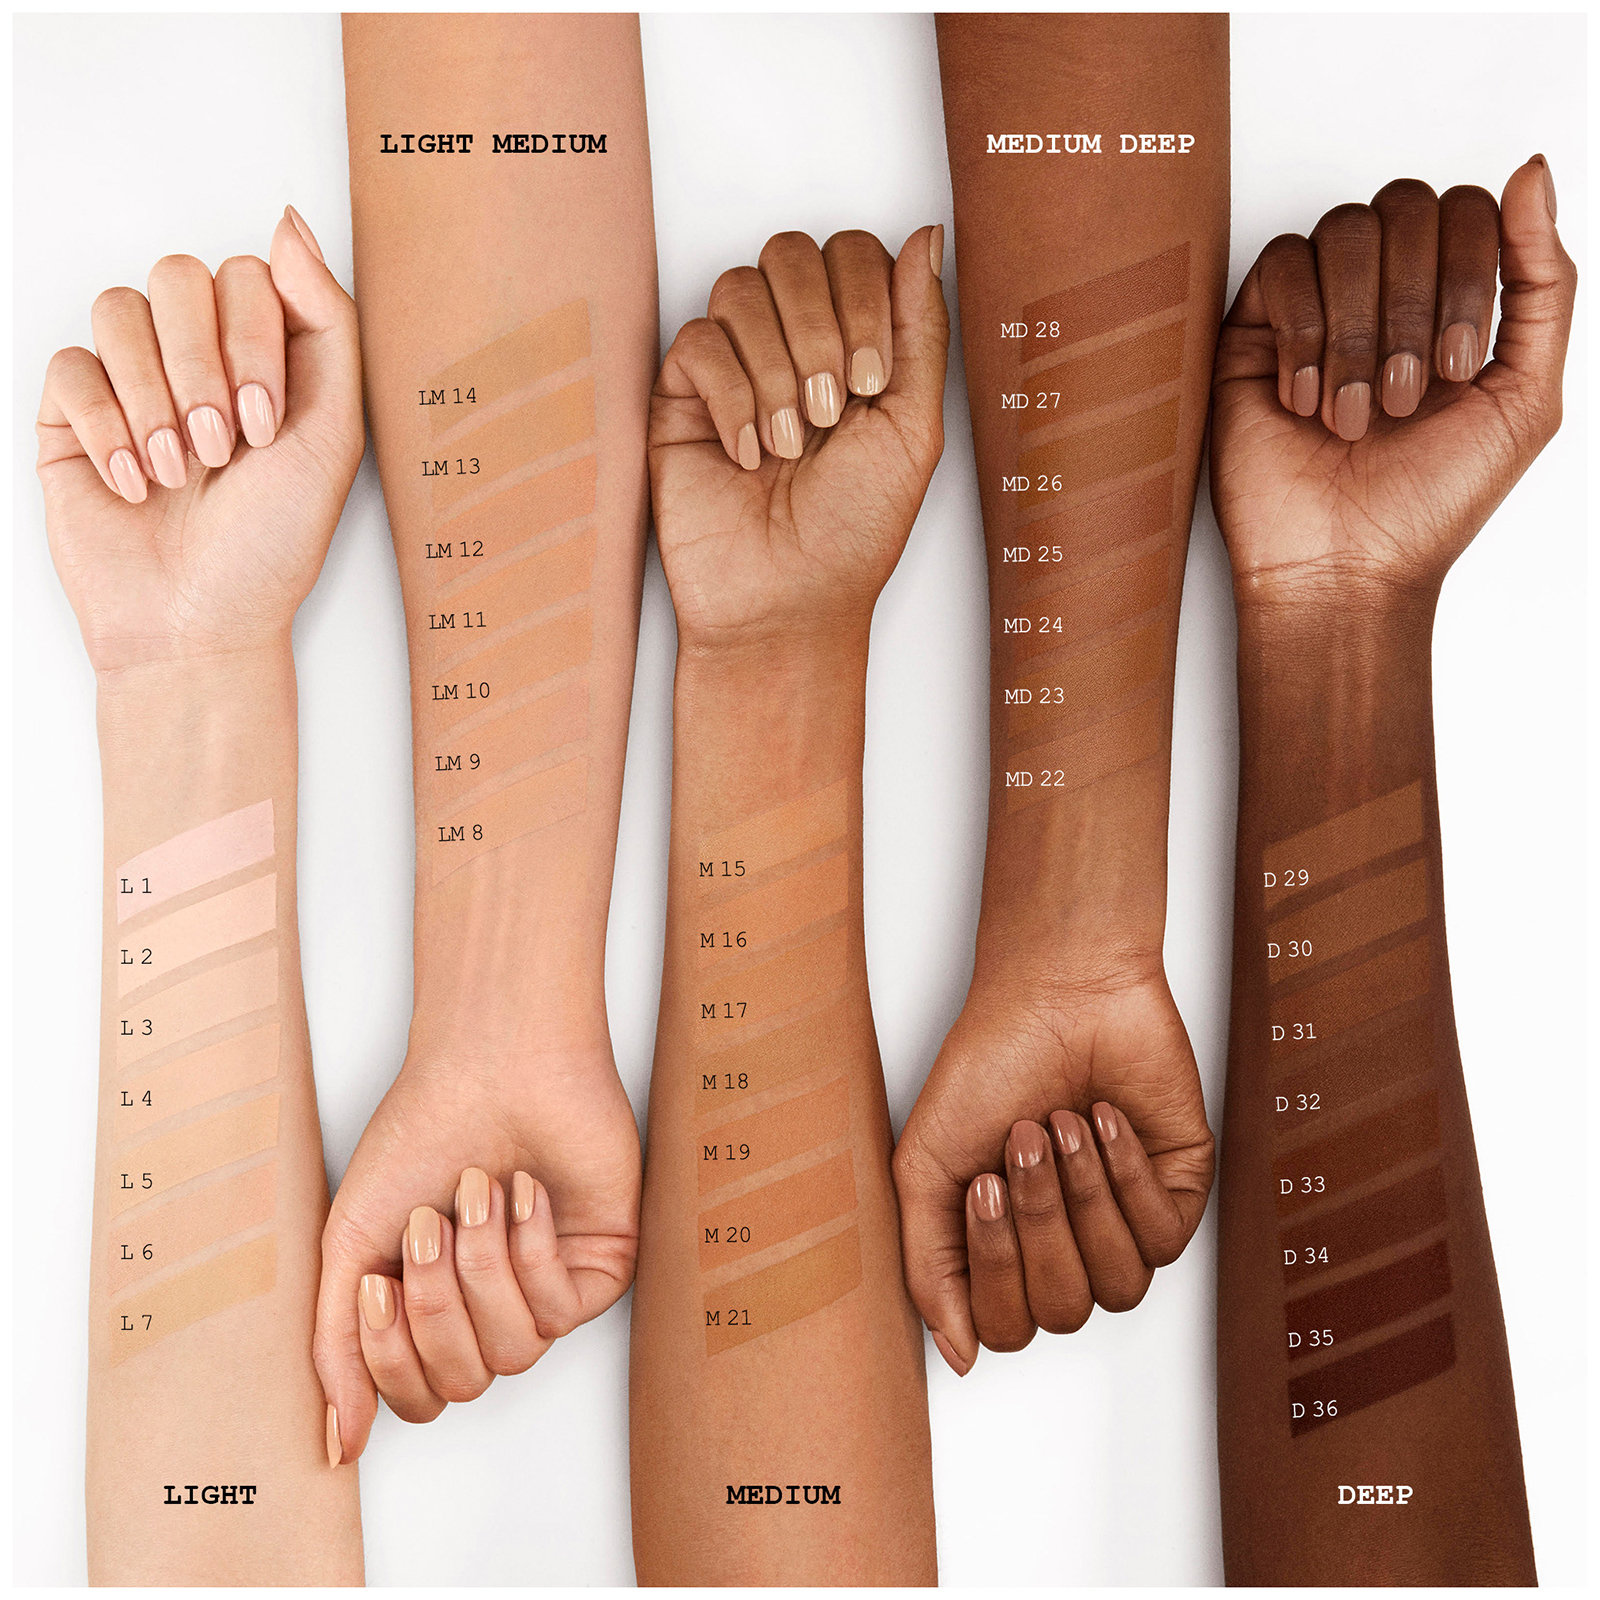 Image showing shades modelled across three different skin tones: Light, Light Medium, Medium, Medium Deep, Deep